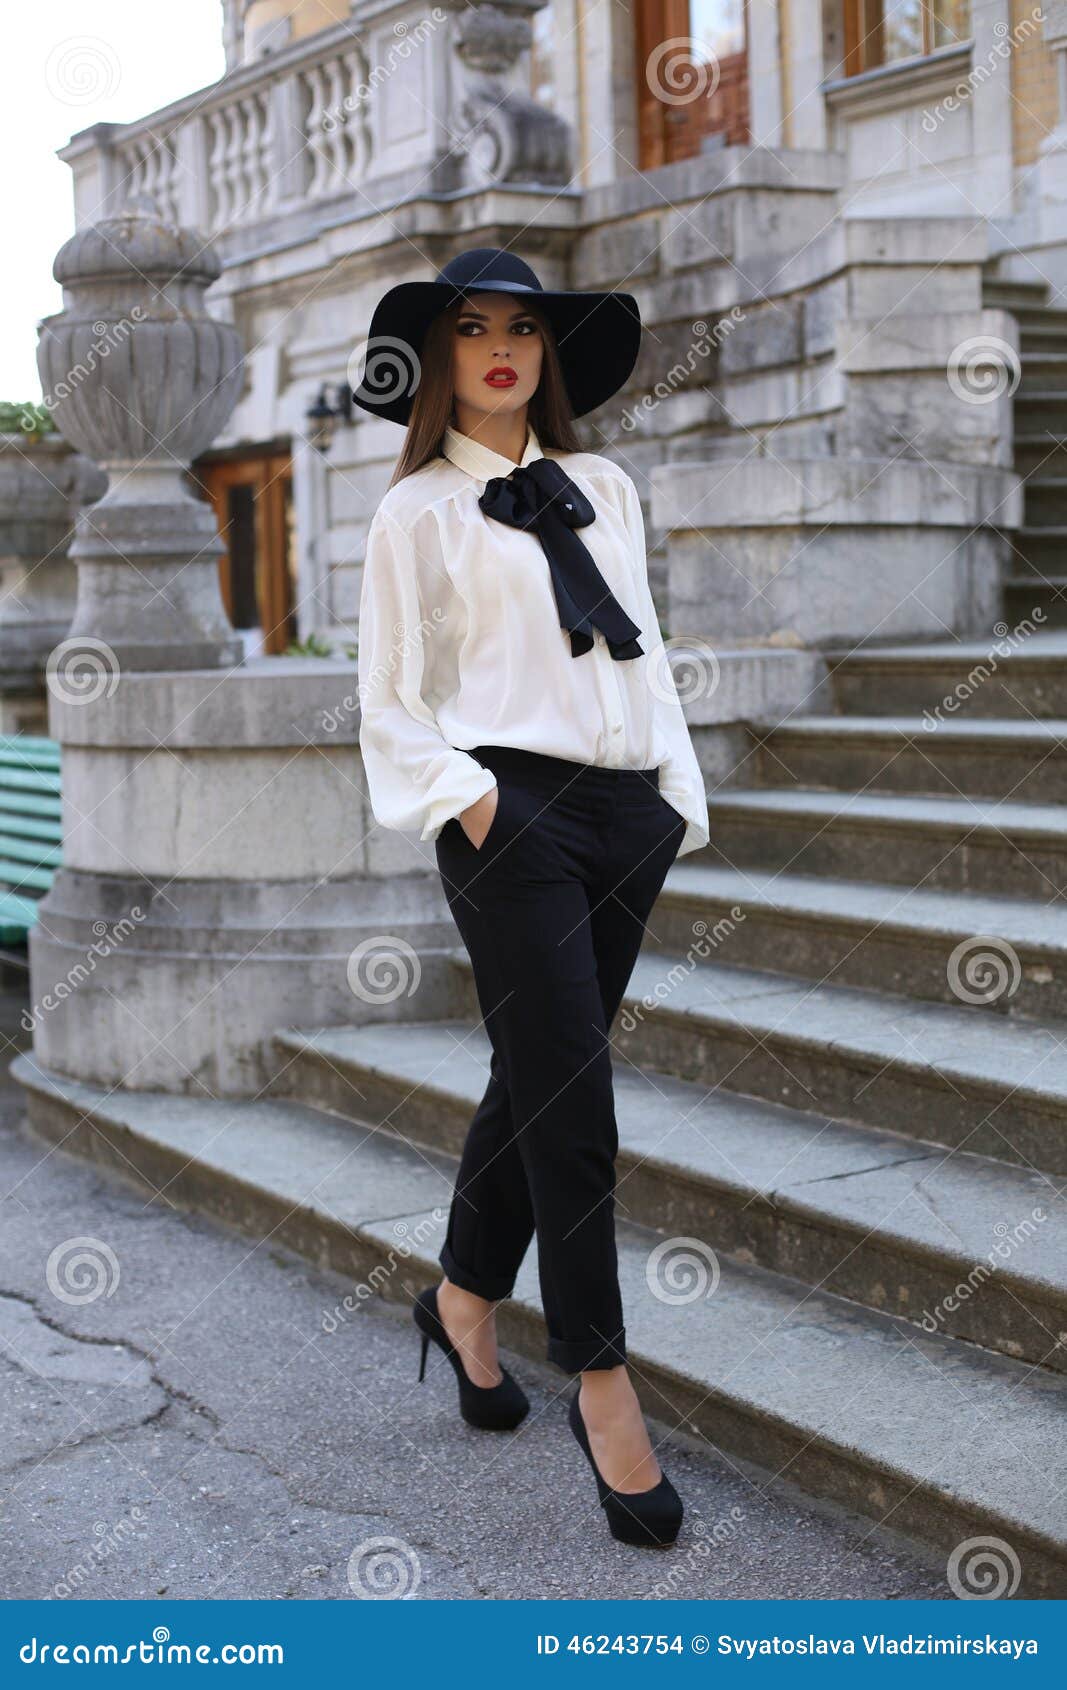 https://thumbs.dreamstime.com/z/mulher-feminino-bonita-que-veste-roupa-elegante-levantando-no-parque-46243754.jpg